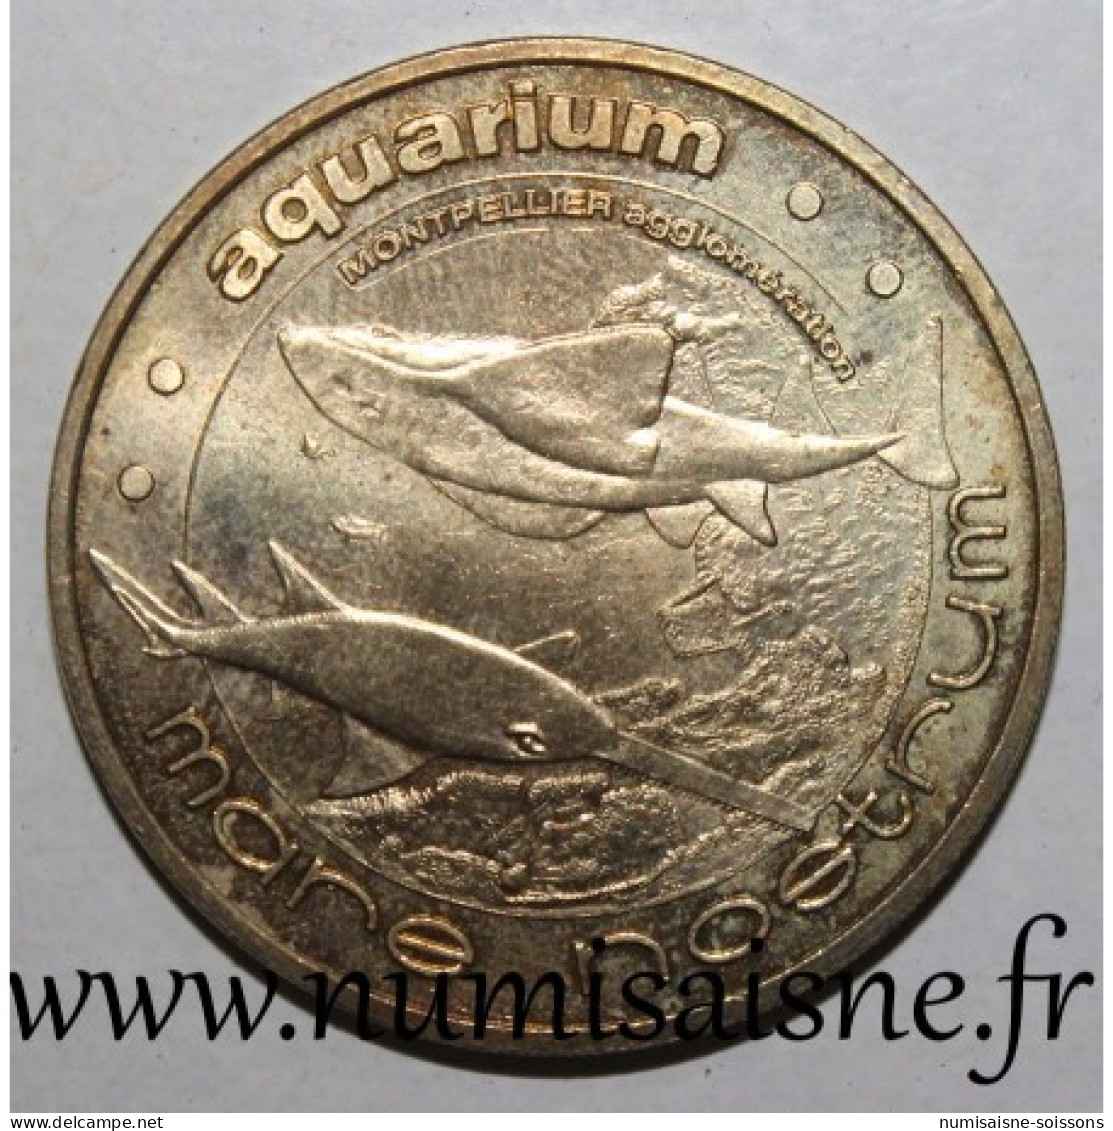 34 - MONTPELLIER - AQUARIUM MARE NOSTRUM - POISSON-SCIE ET RAIE-GUITARE - Monnaie De Paris - 2009 - 2009